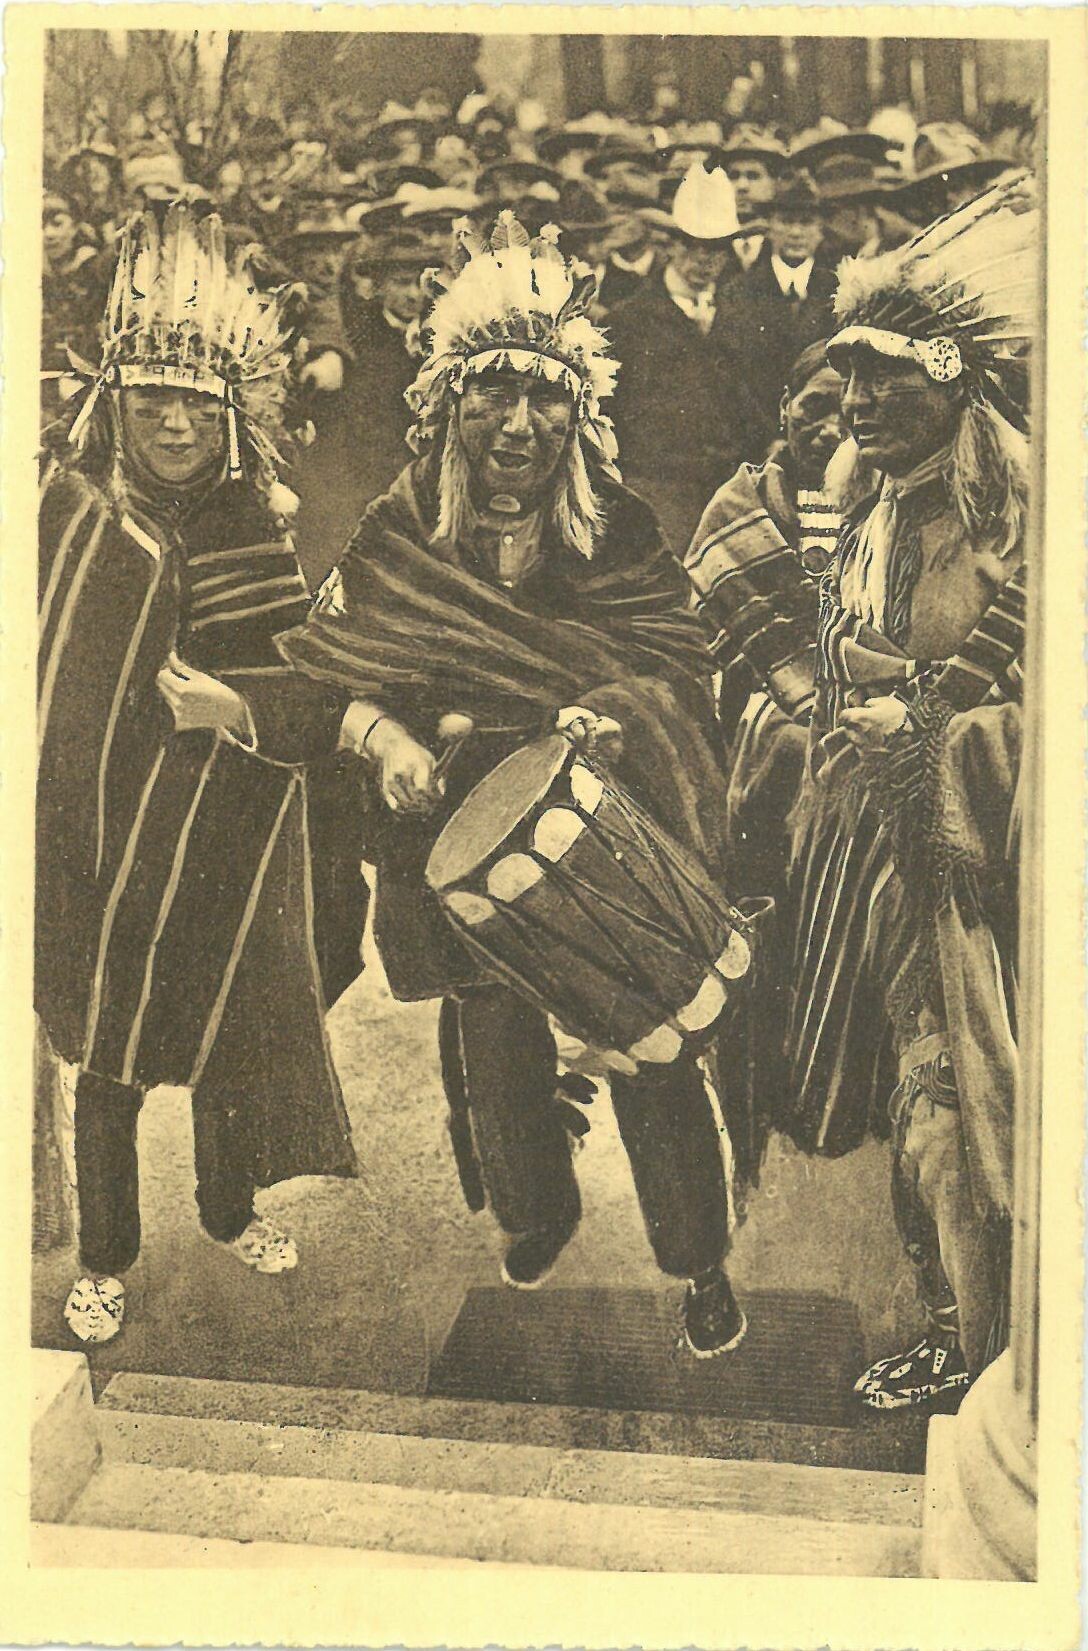 Indianische Totenklage an Karl Mays letzter Ruhestätte in Radebeul, Januar 1927 (Karl-May-Museum gGmbH RR-R)